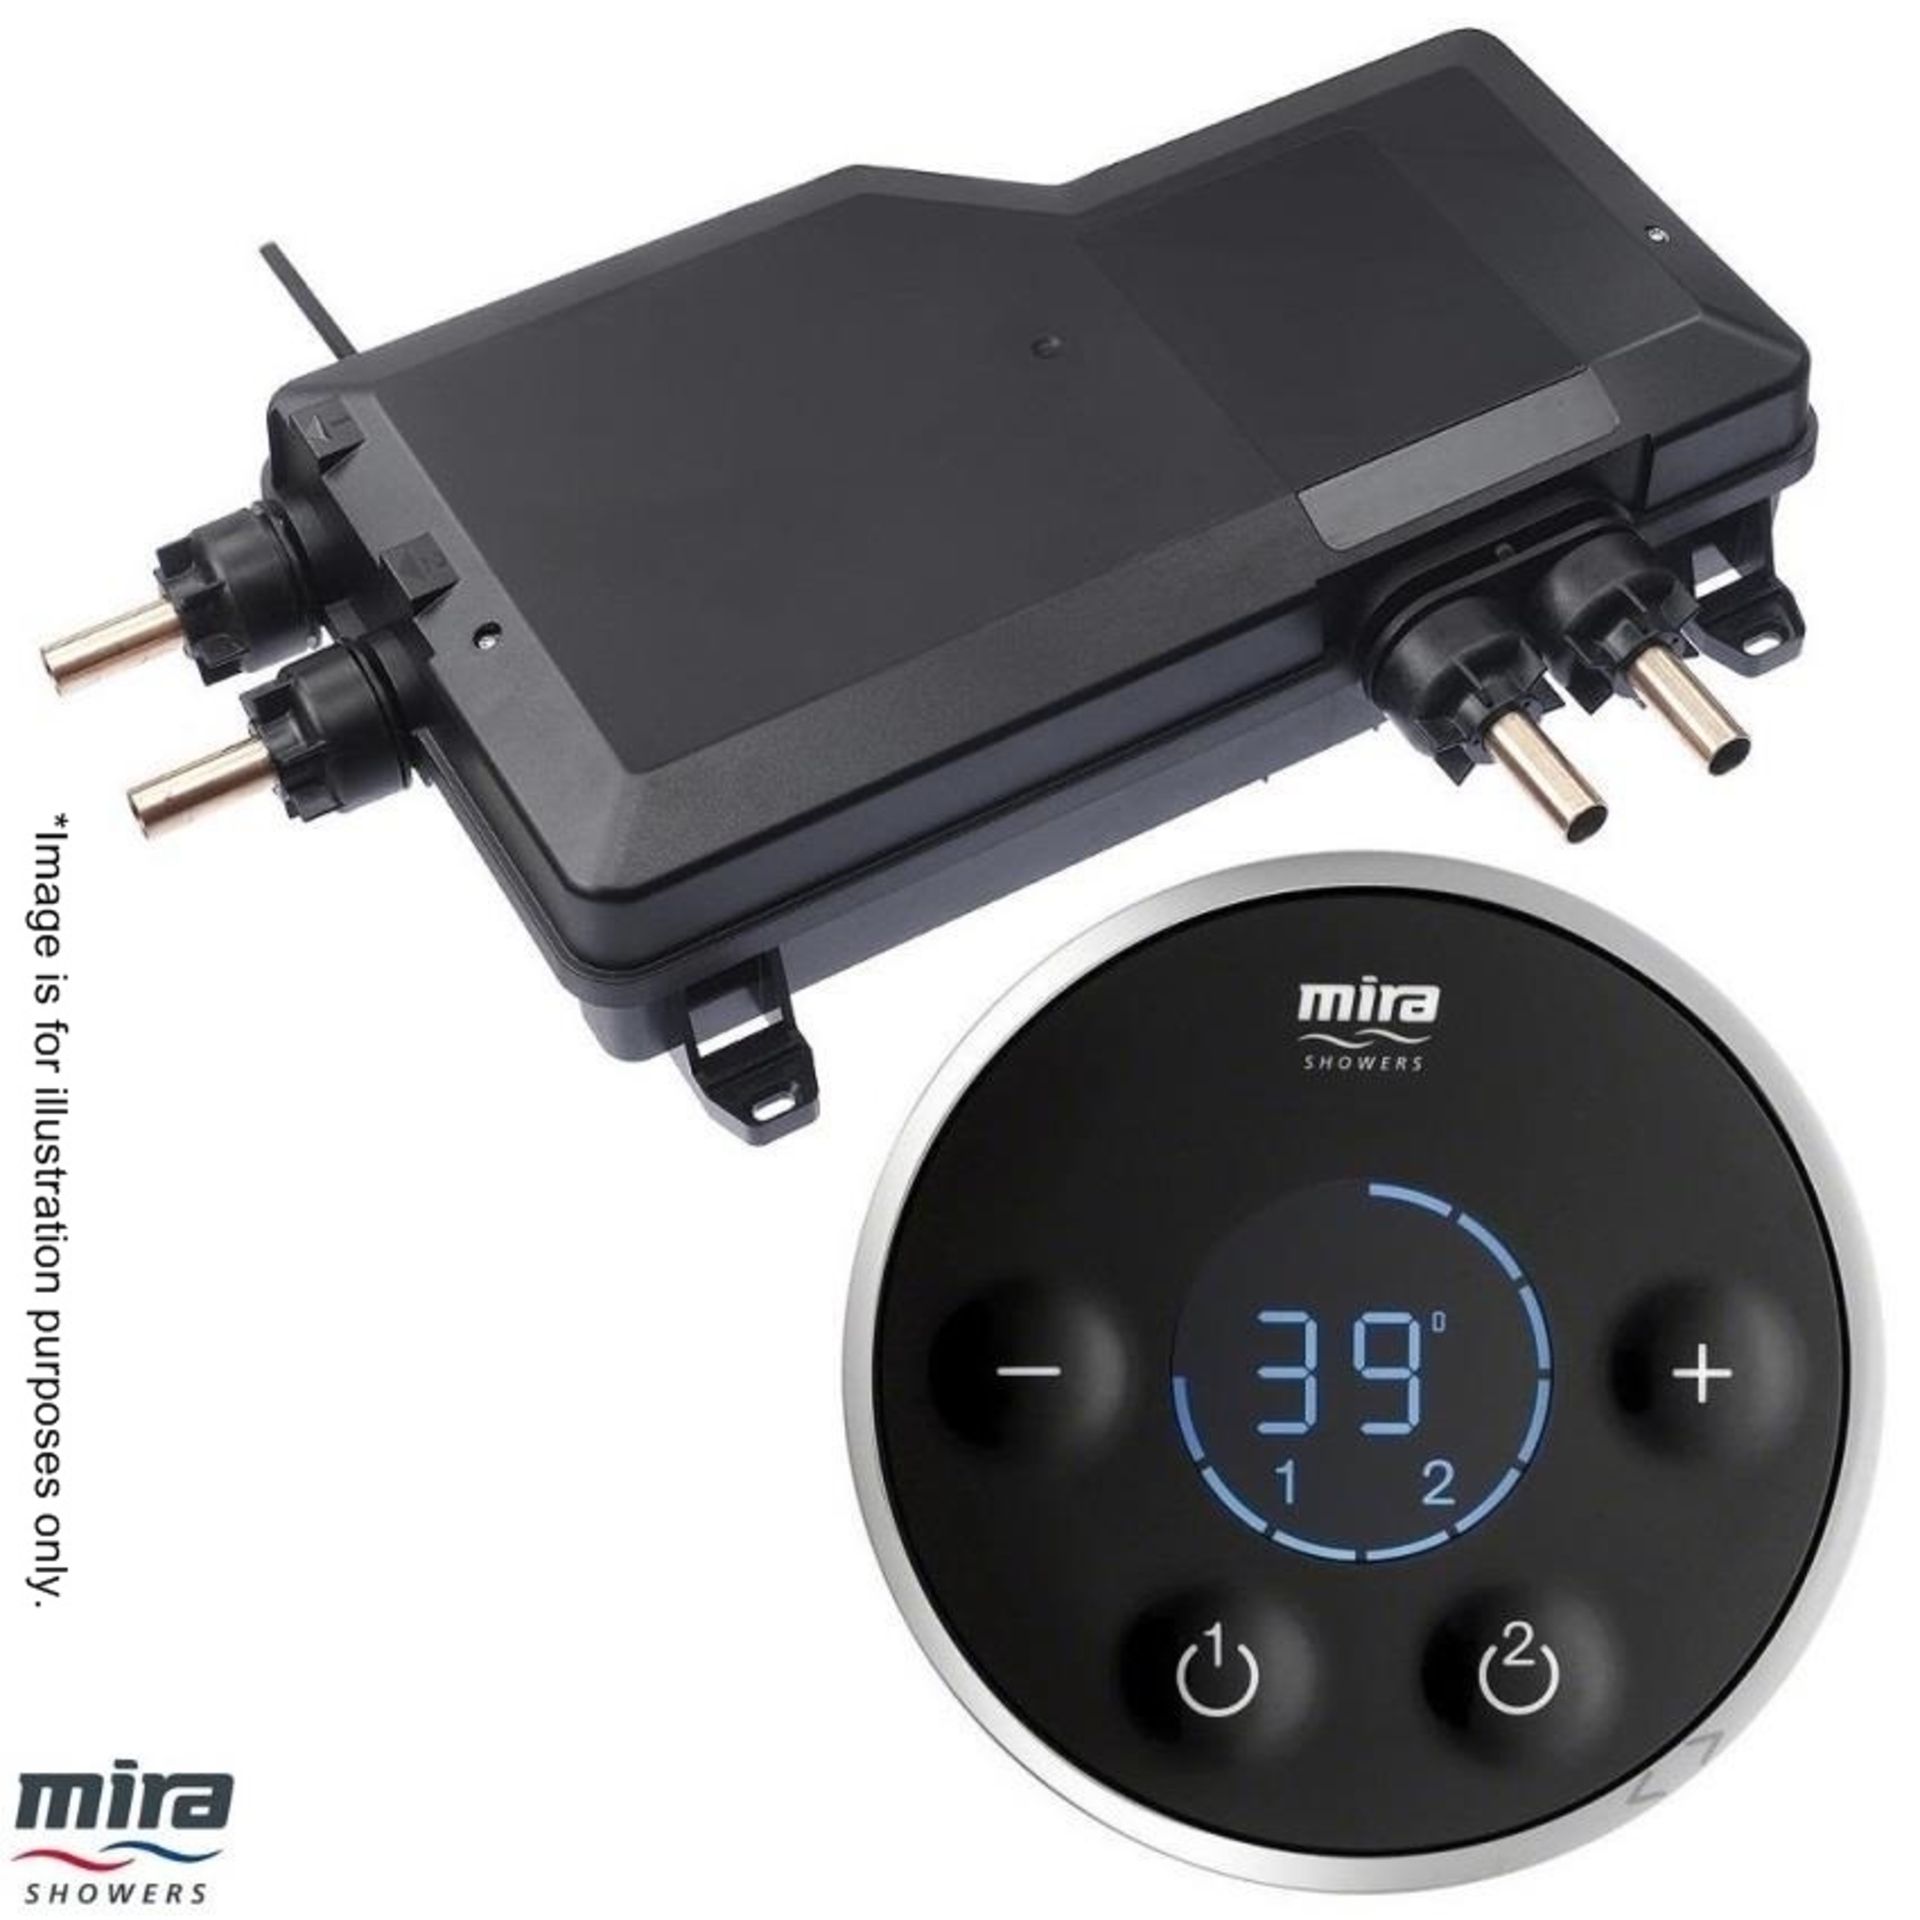 1 x MIRA Platinum Dual Digital Valve and Wireless Controller, LP/Gravity Fed - Model: 1.1796.006 -